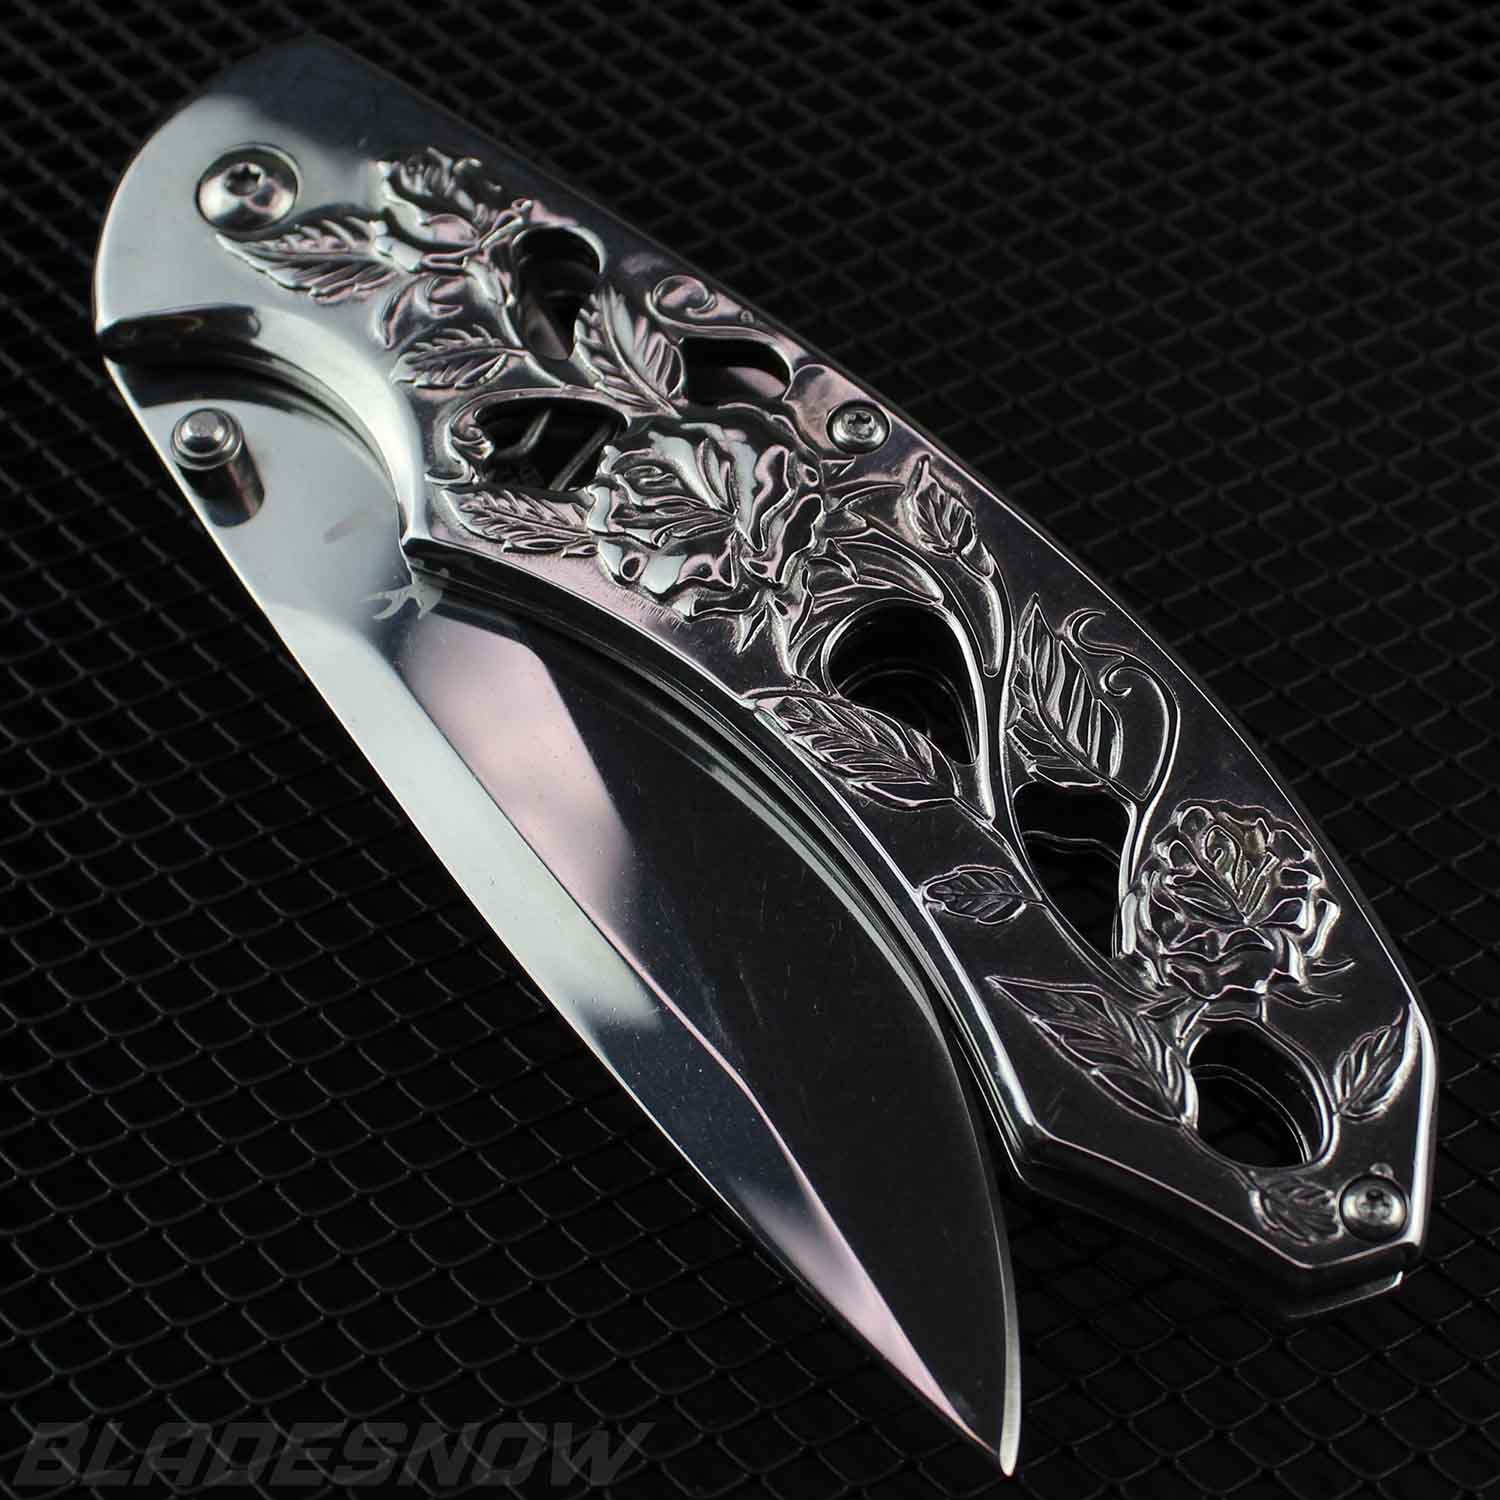 SE Spring Assisted Clip Point Folding Knife with Bald Eagle Design